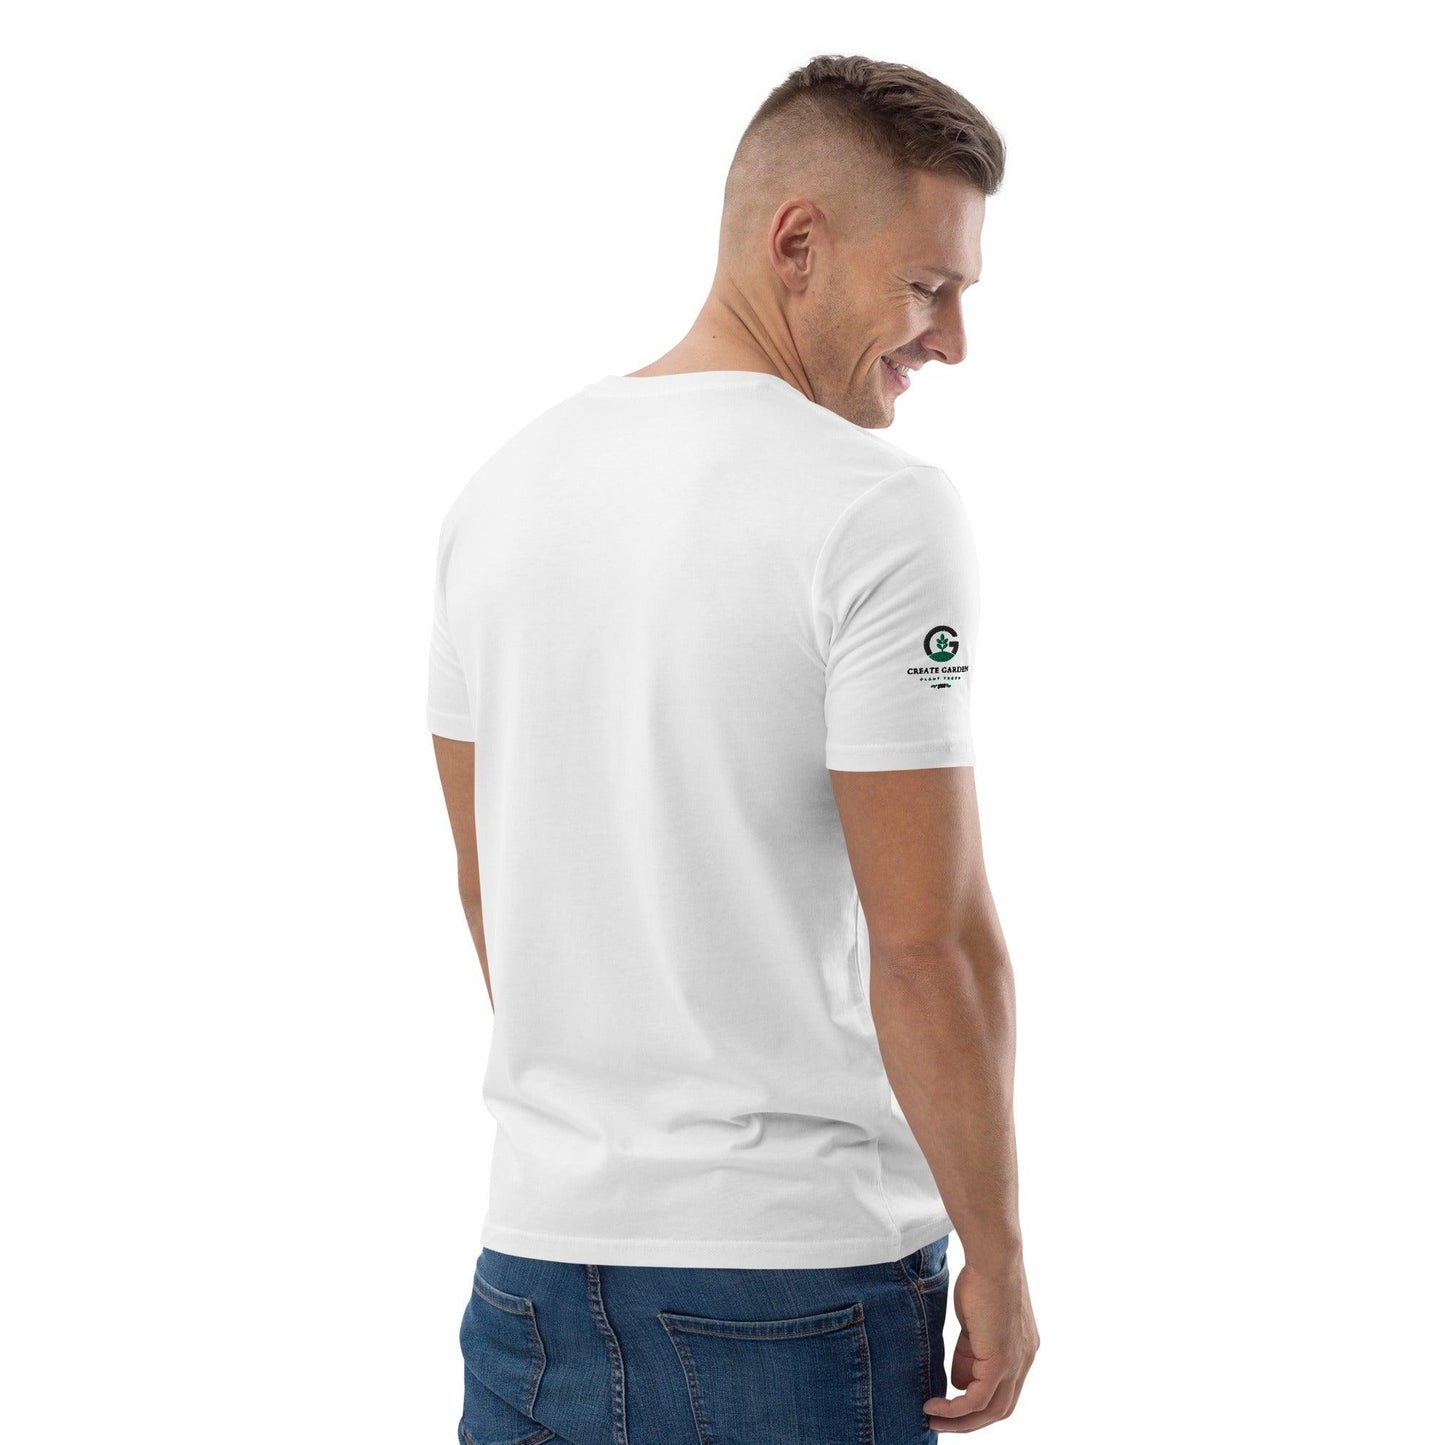 Digital Tree - Unisex organic cotton t-shirt